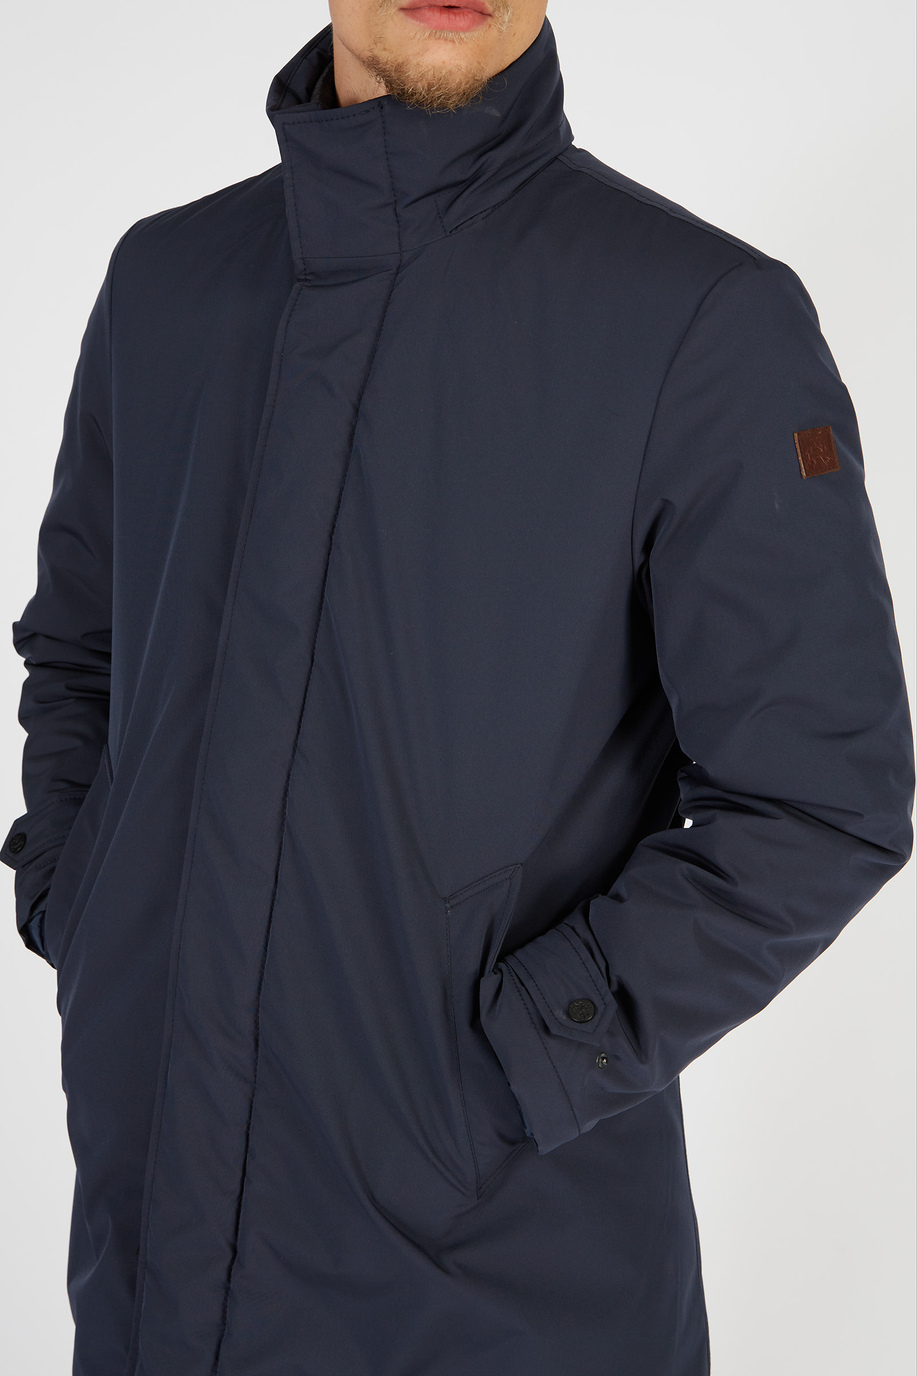 Men’s Blue Ribbon jacket in regular fit nylon - Outerwear and Jackets | La Martina - Official Online Shop